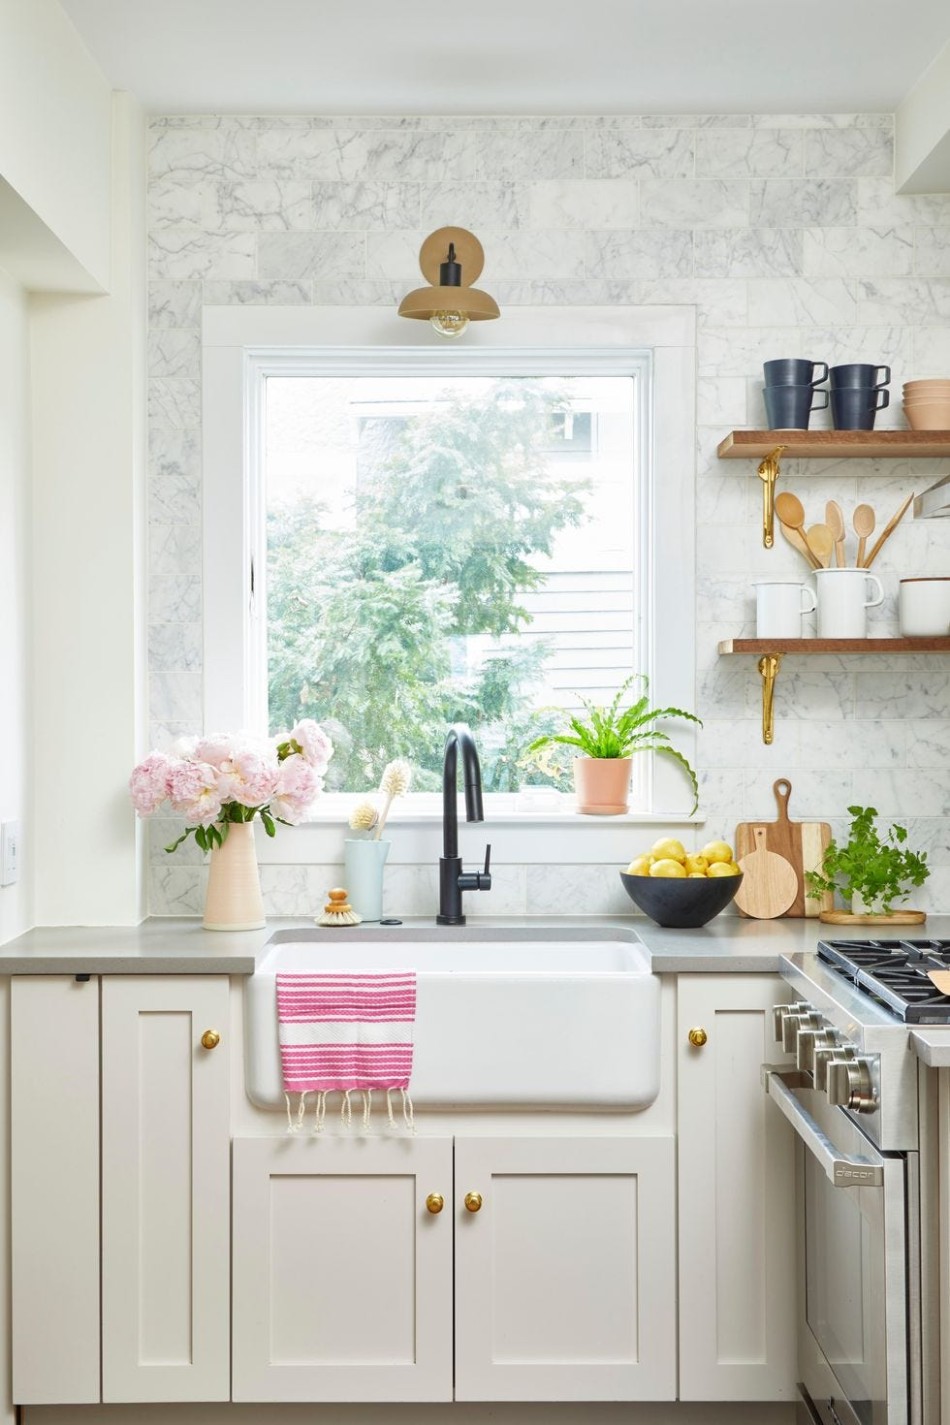 9 Best Small Kitchen Design Ideas - Tiny Kitchen Decorating - super small kitchen ideas